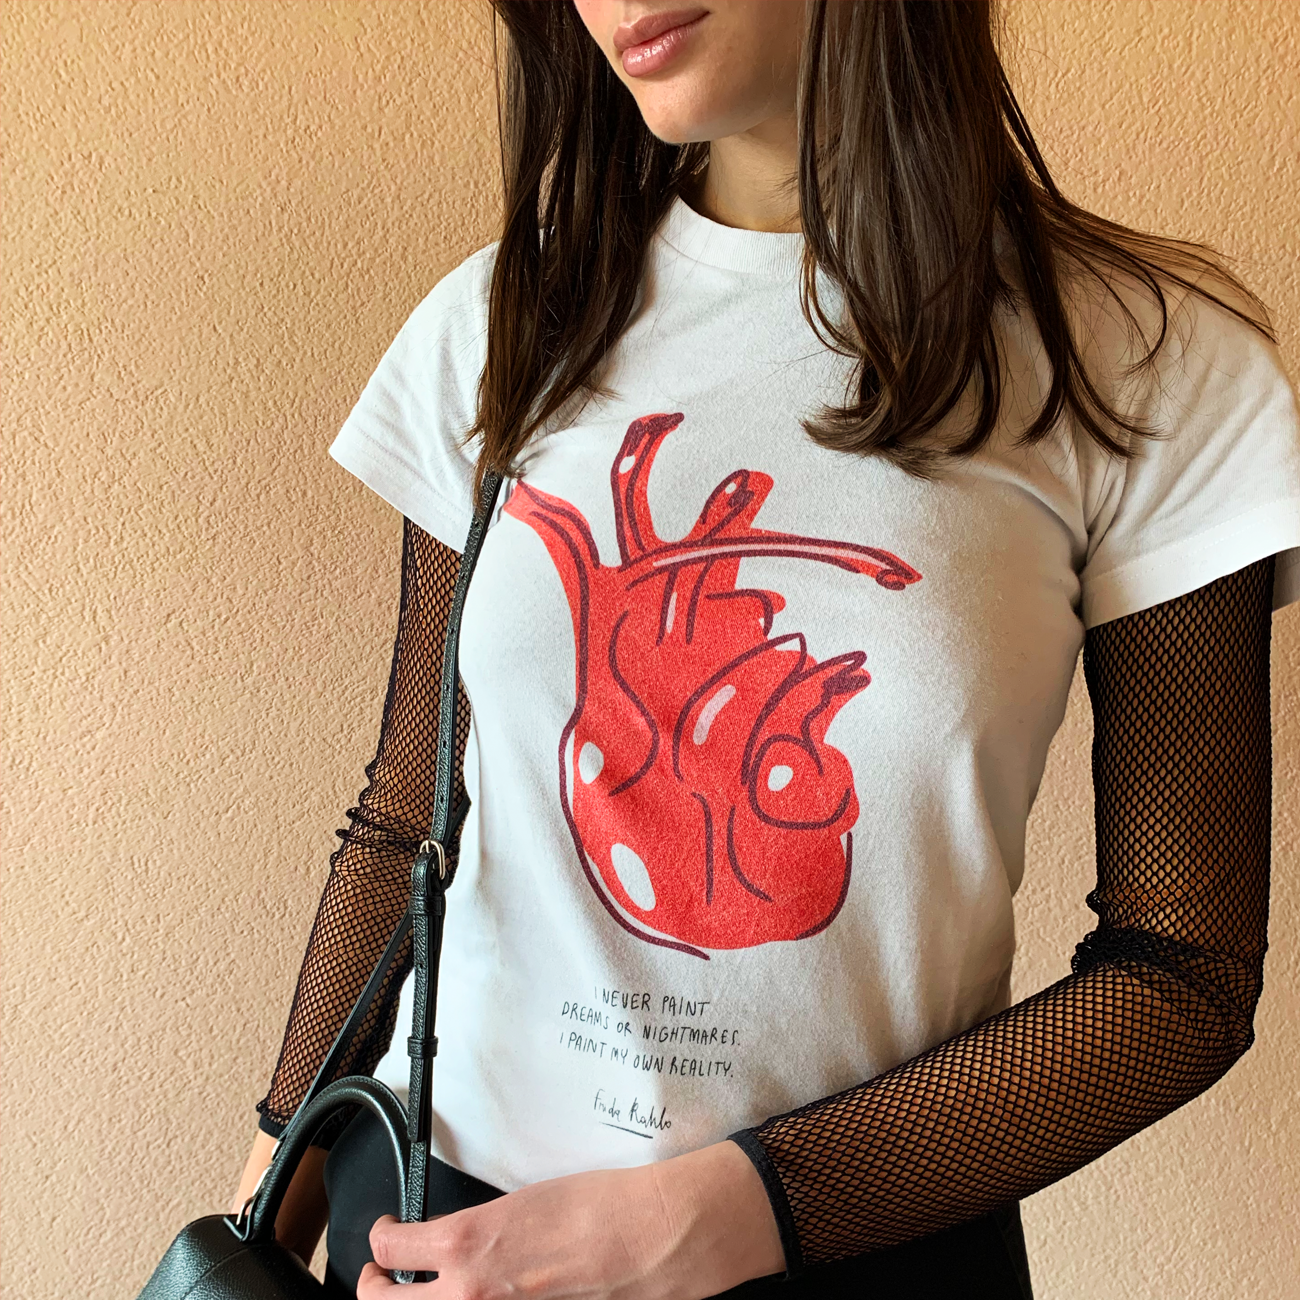 Frida's Heart T-shirt by Silvana Mariani